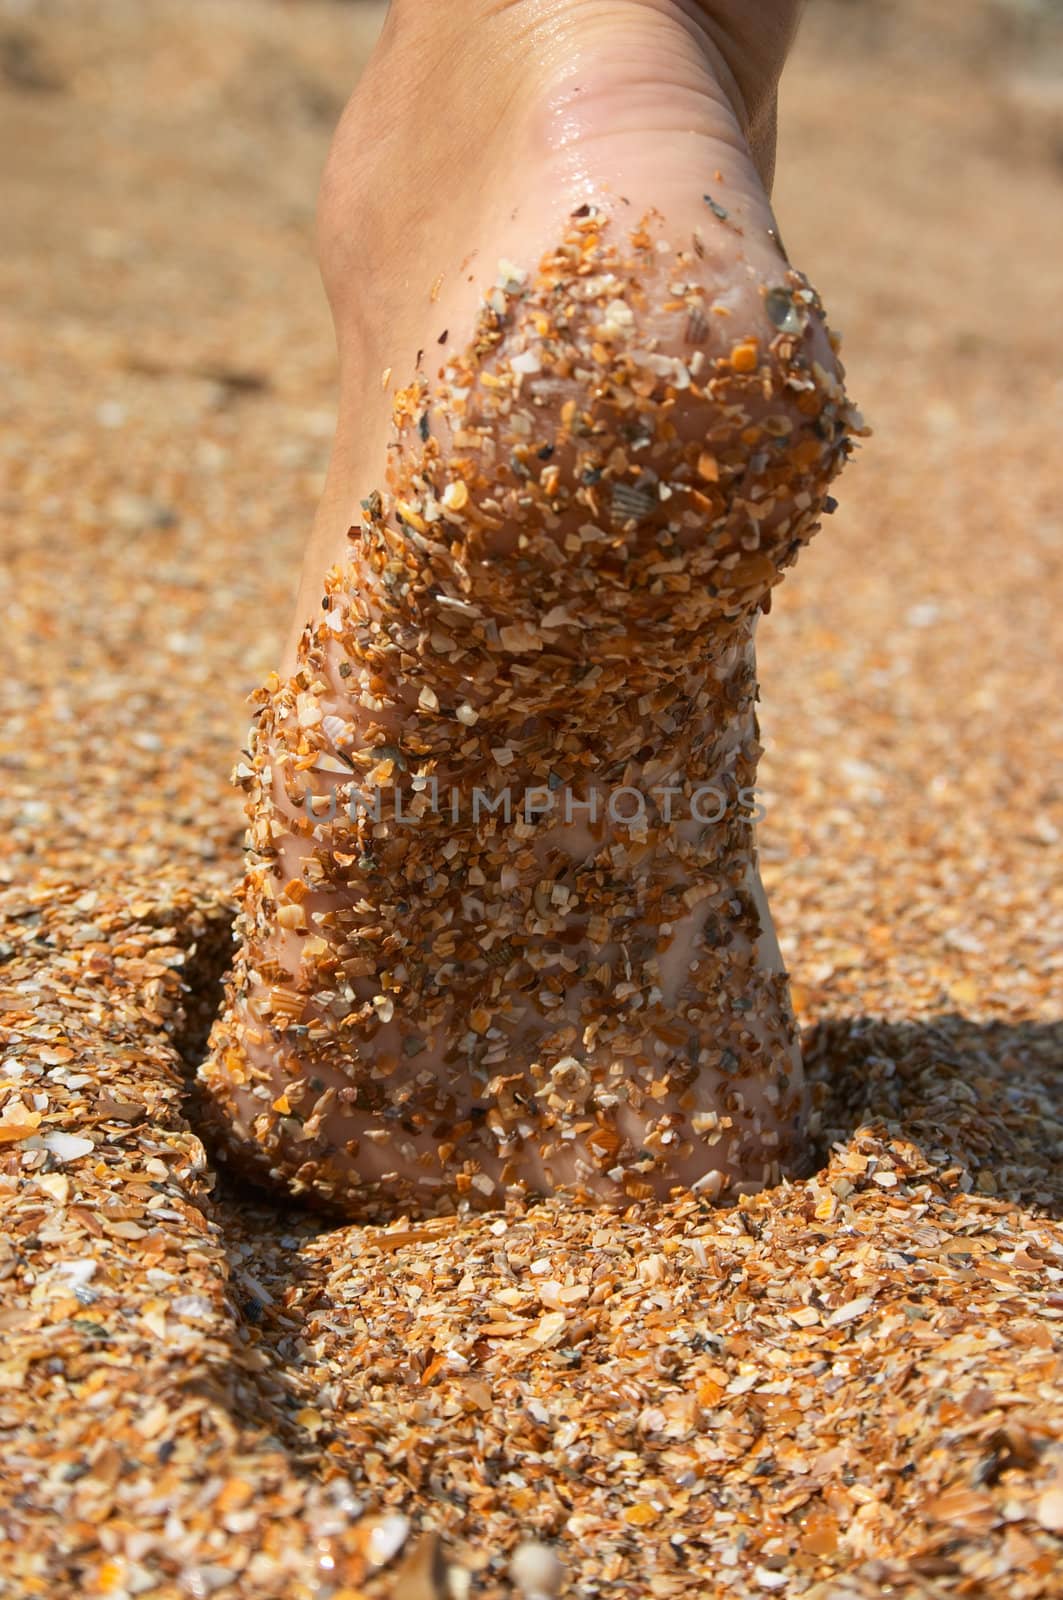 barefoot sole in sand by Ukrainian